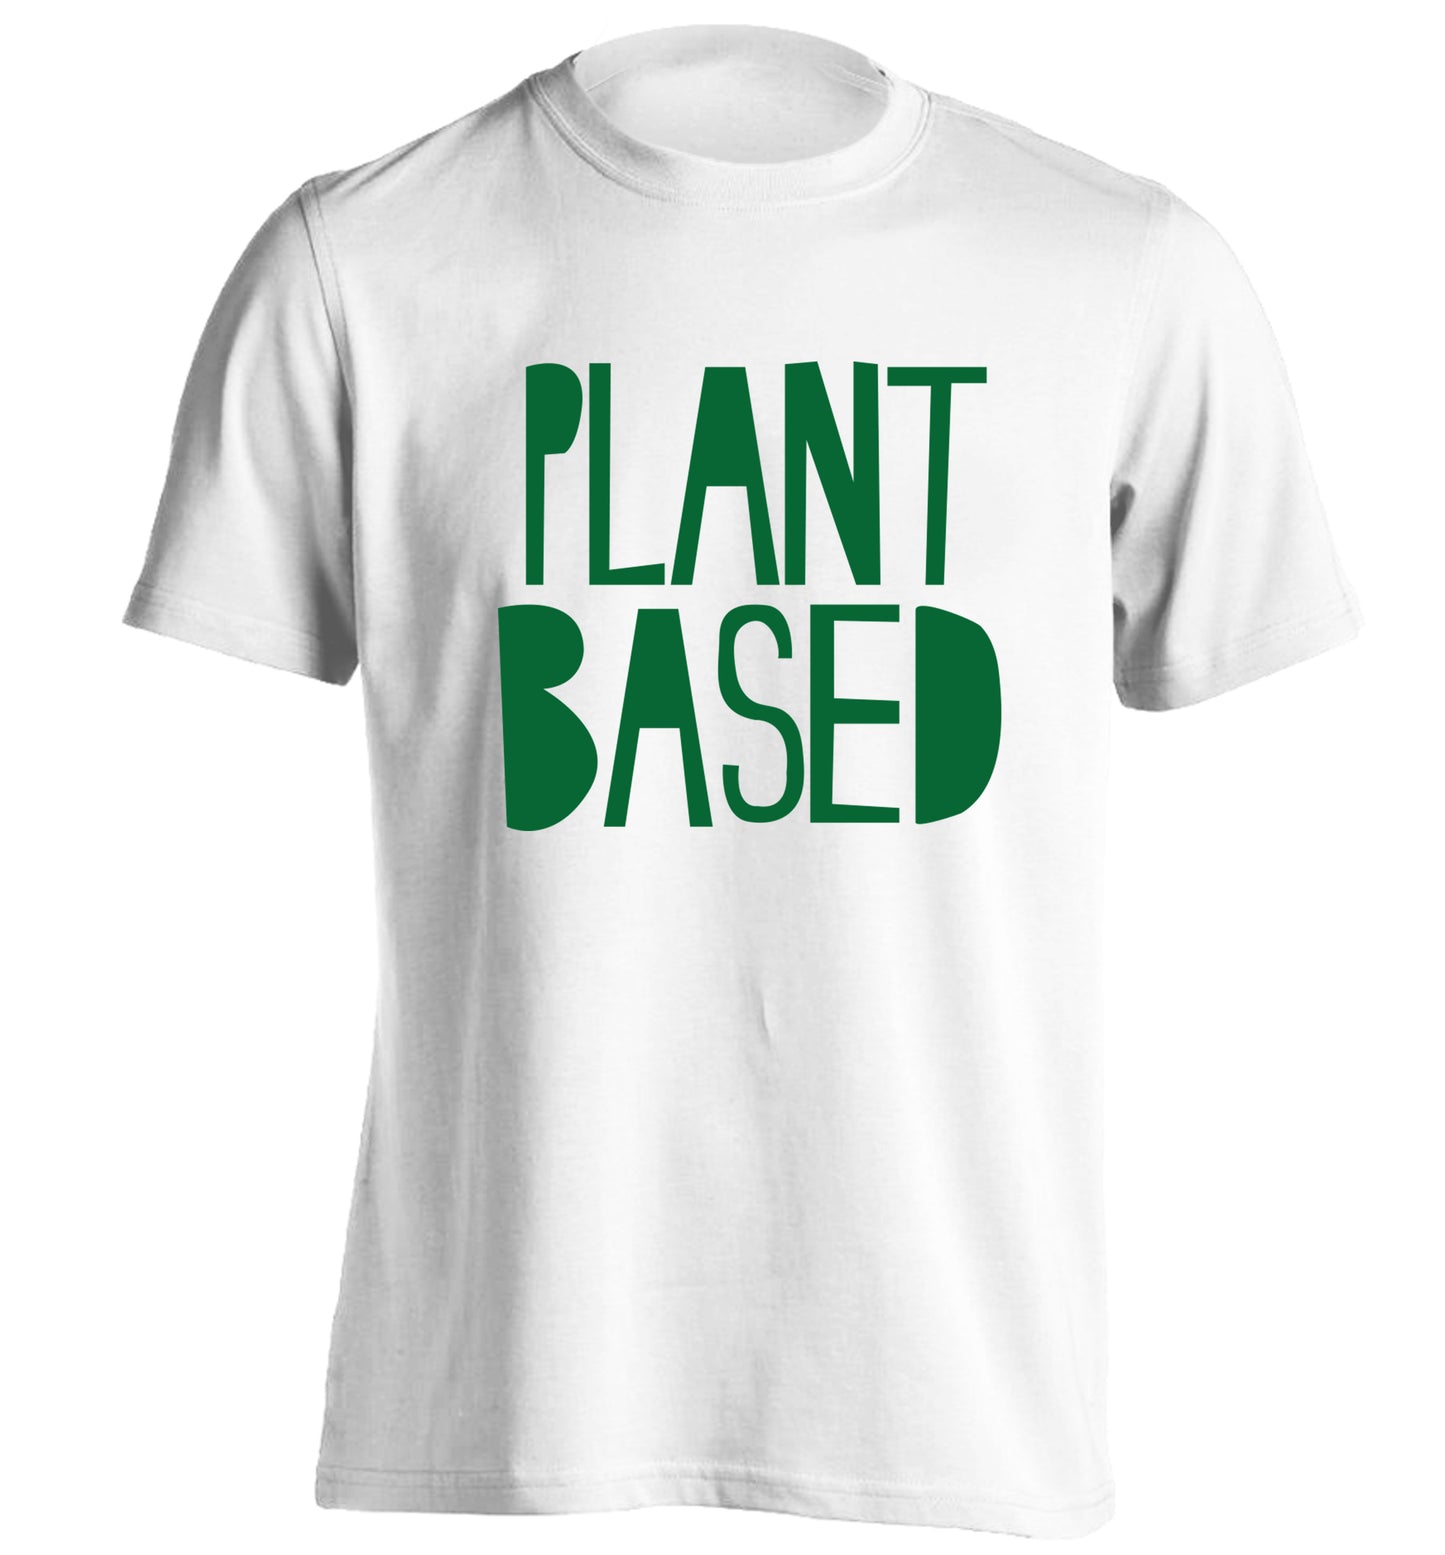 Plant Based adults unisex white Tshirt 2XL